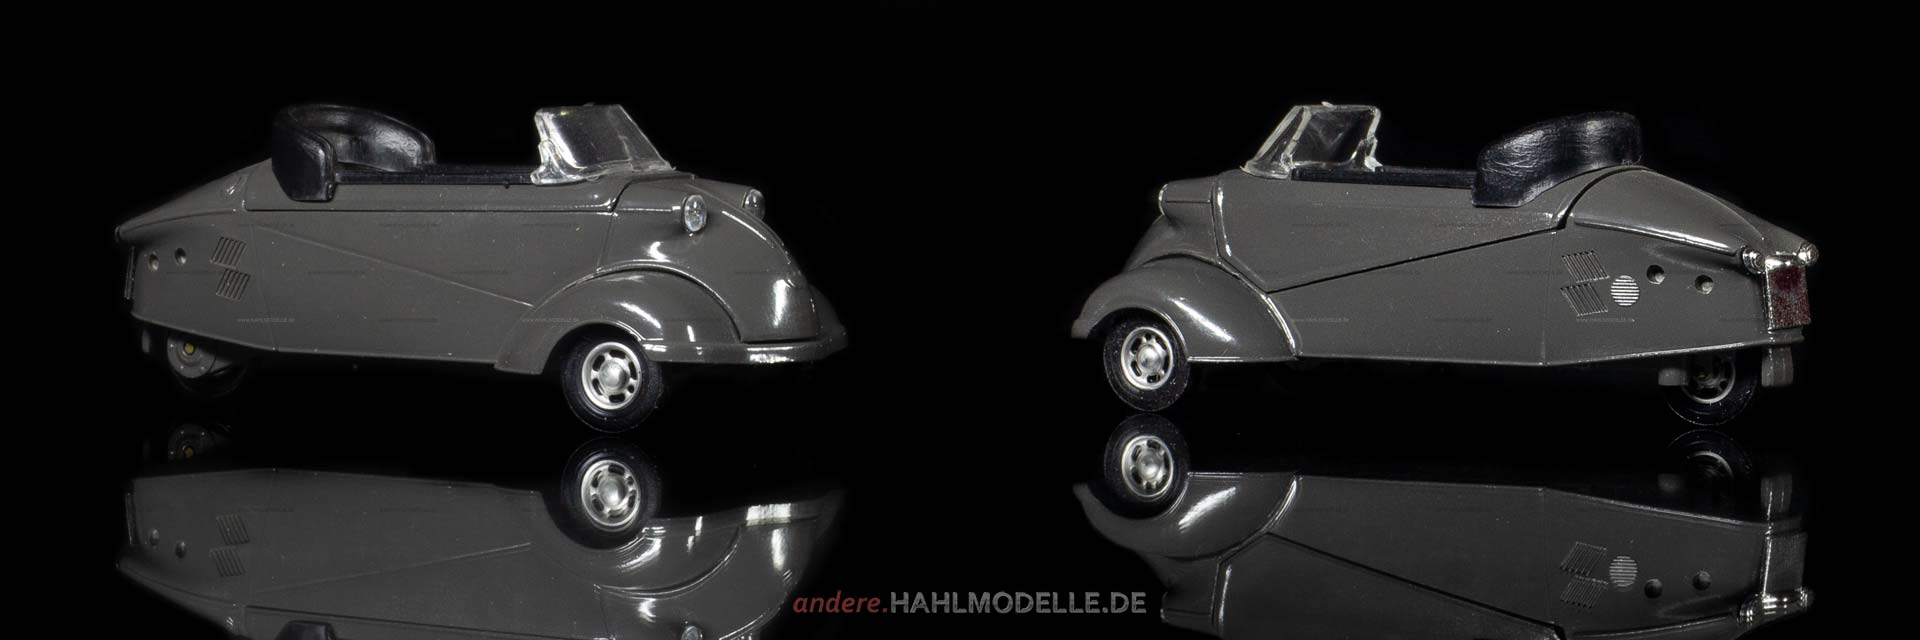 Messerschmitt Kabinenroller KR 200 | Rollermobil | Gama | 1:43 | www.andere.hahlmodelle.de